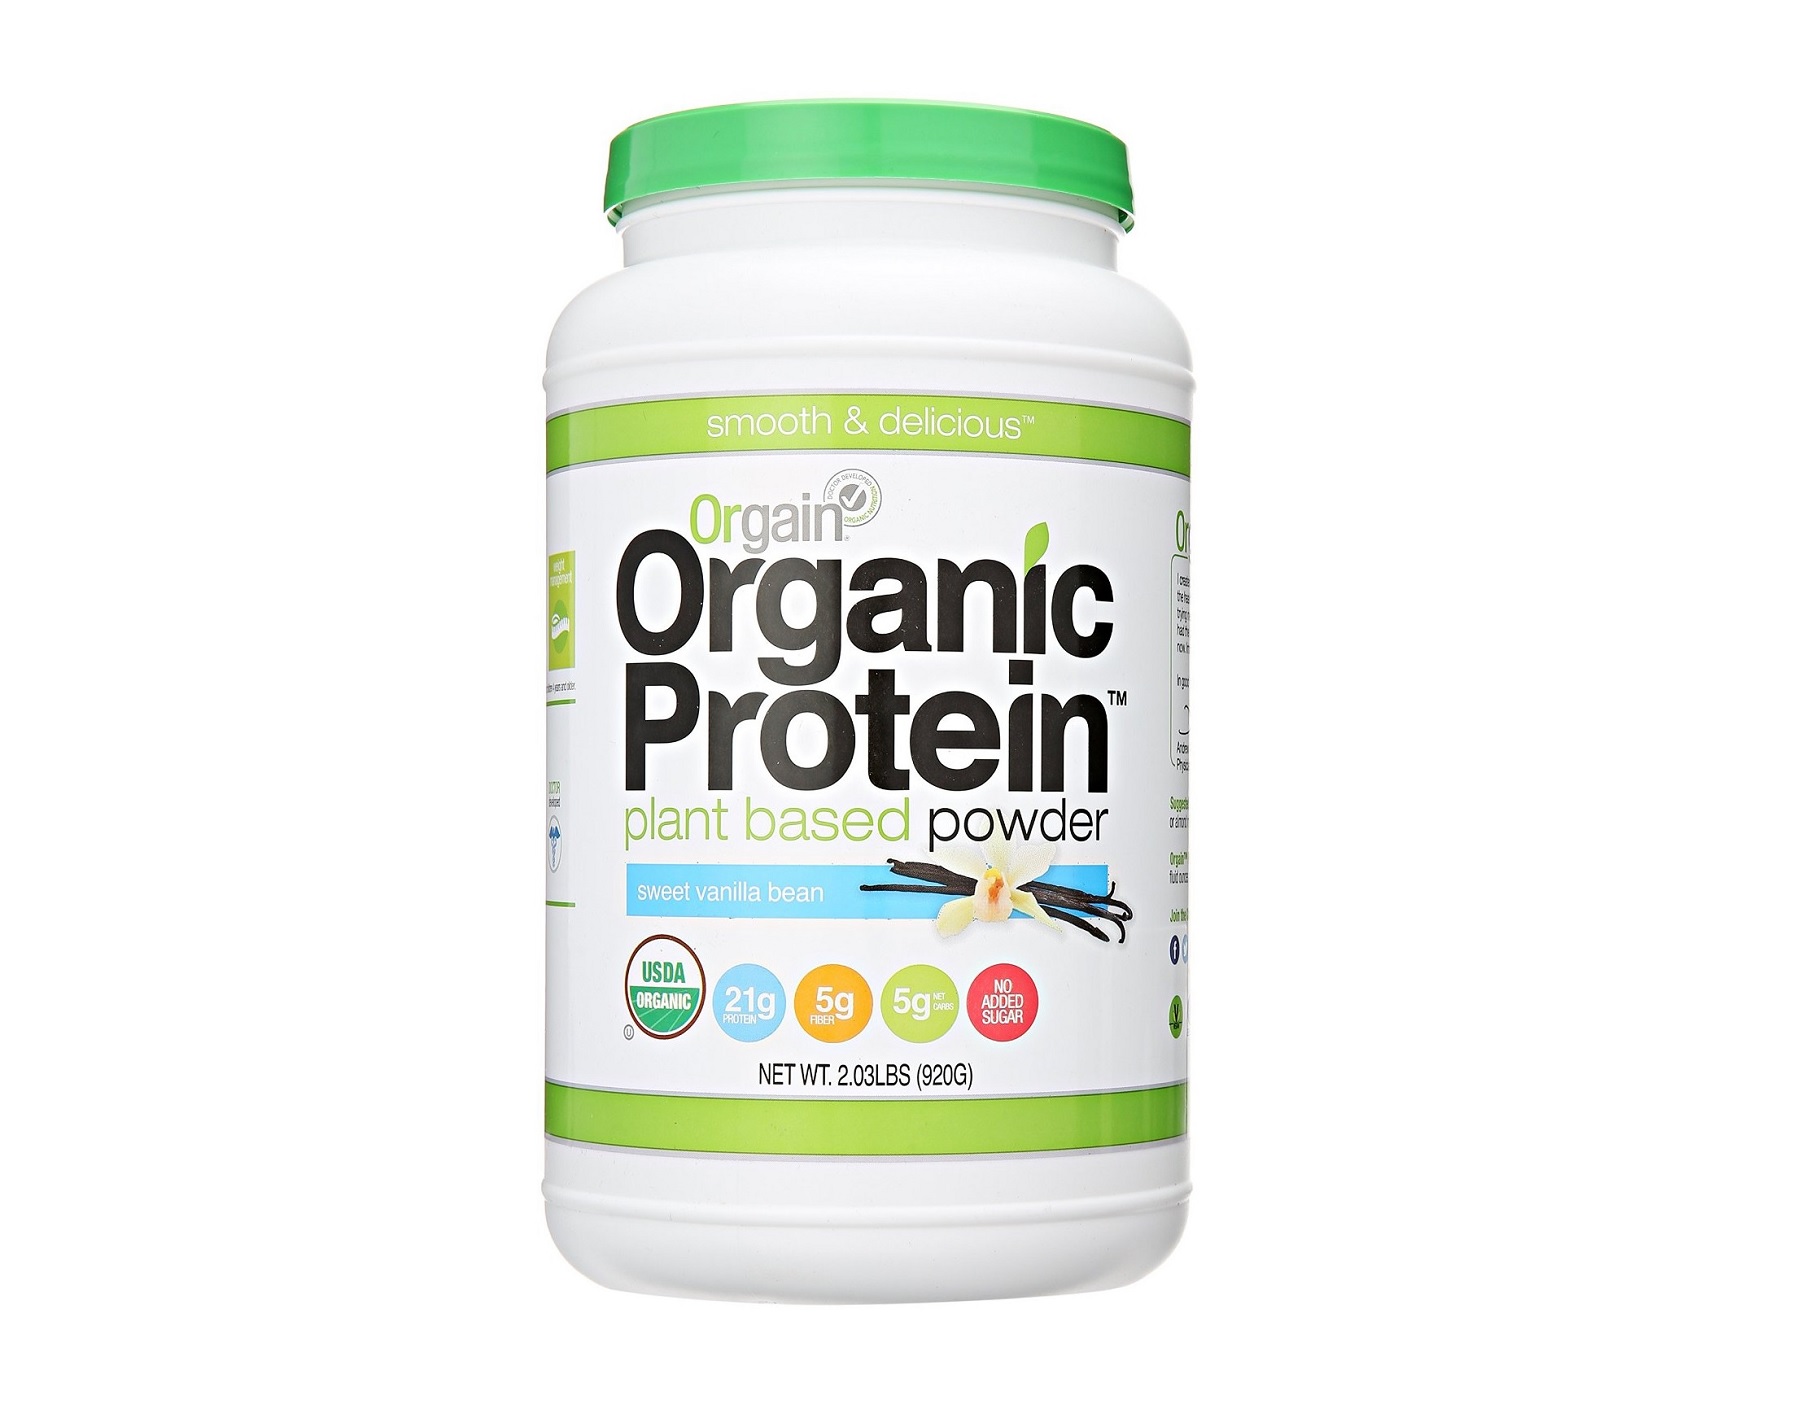 orgain organic plant based protein powder sweet vanilla bean